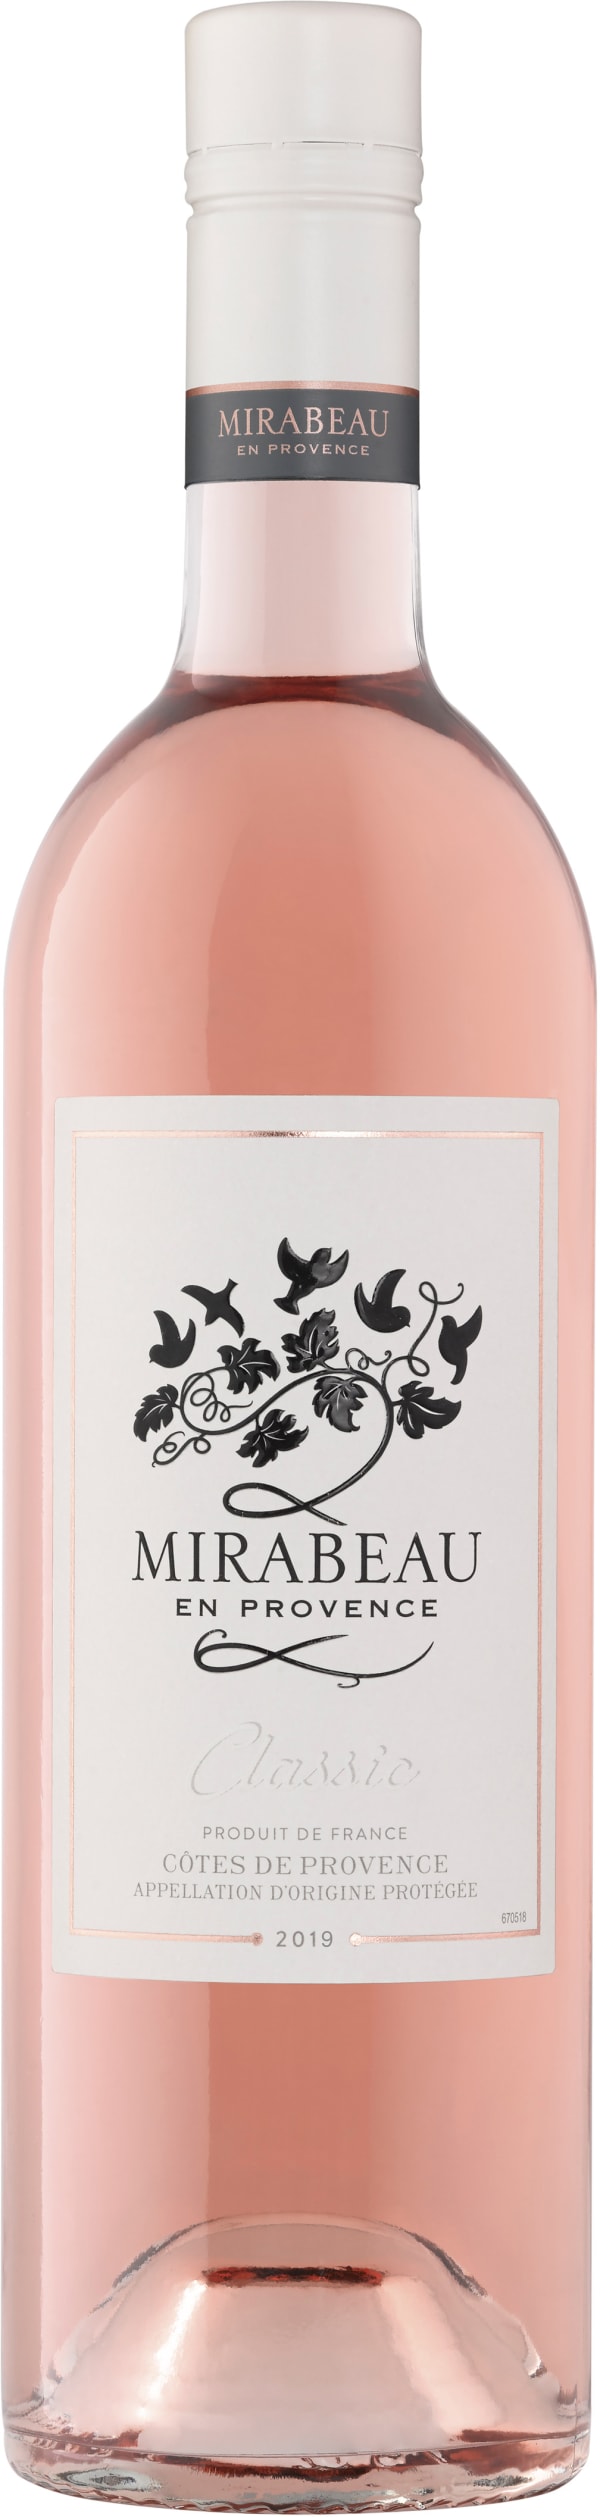 Mirabeau En Provence Classic Rosé 2019 Alko 